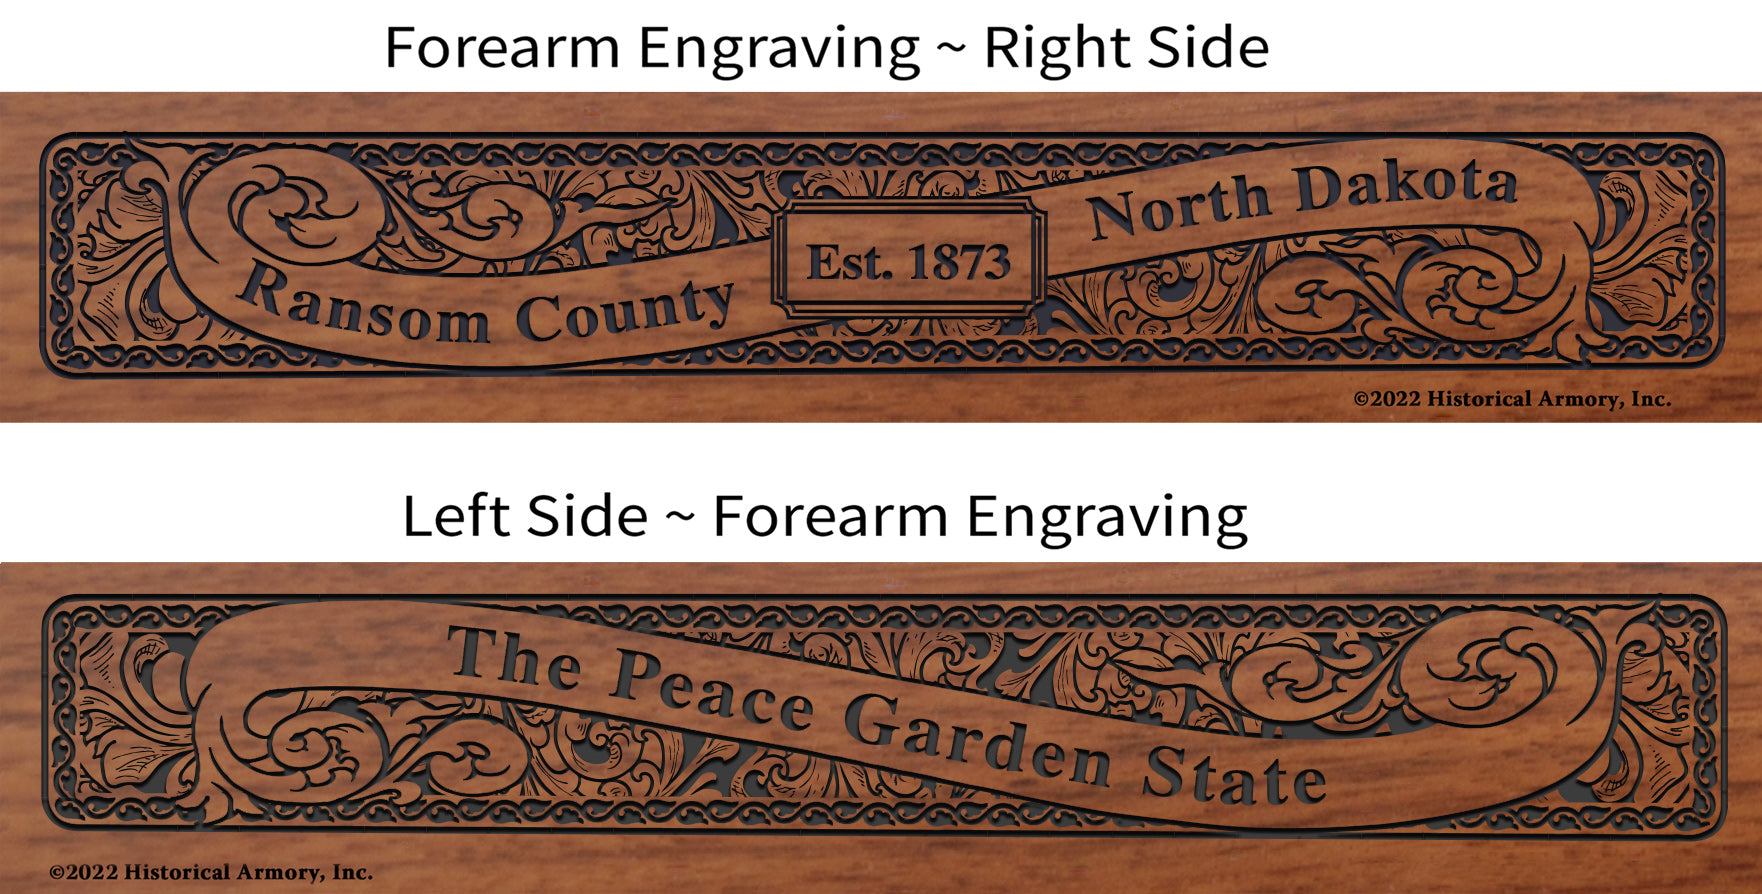 Ransom County North Dakota Engraved Rifle Forearm